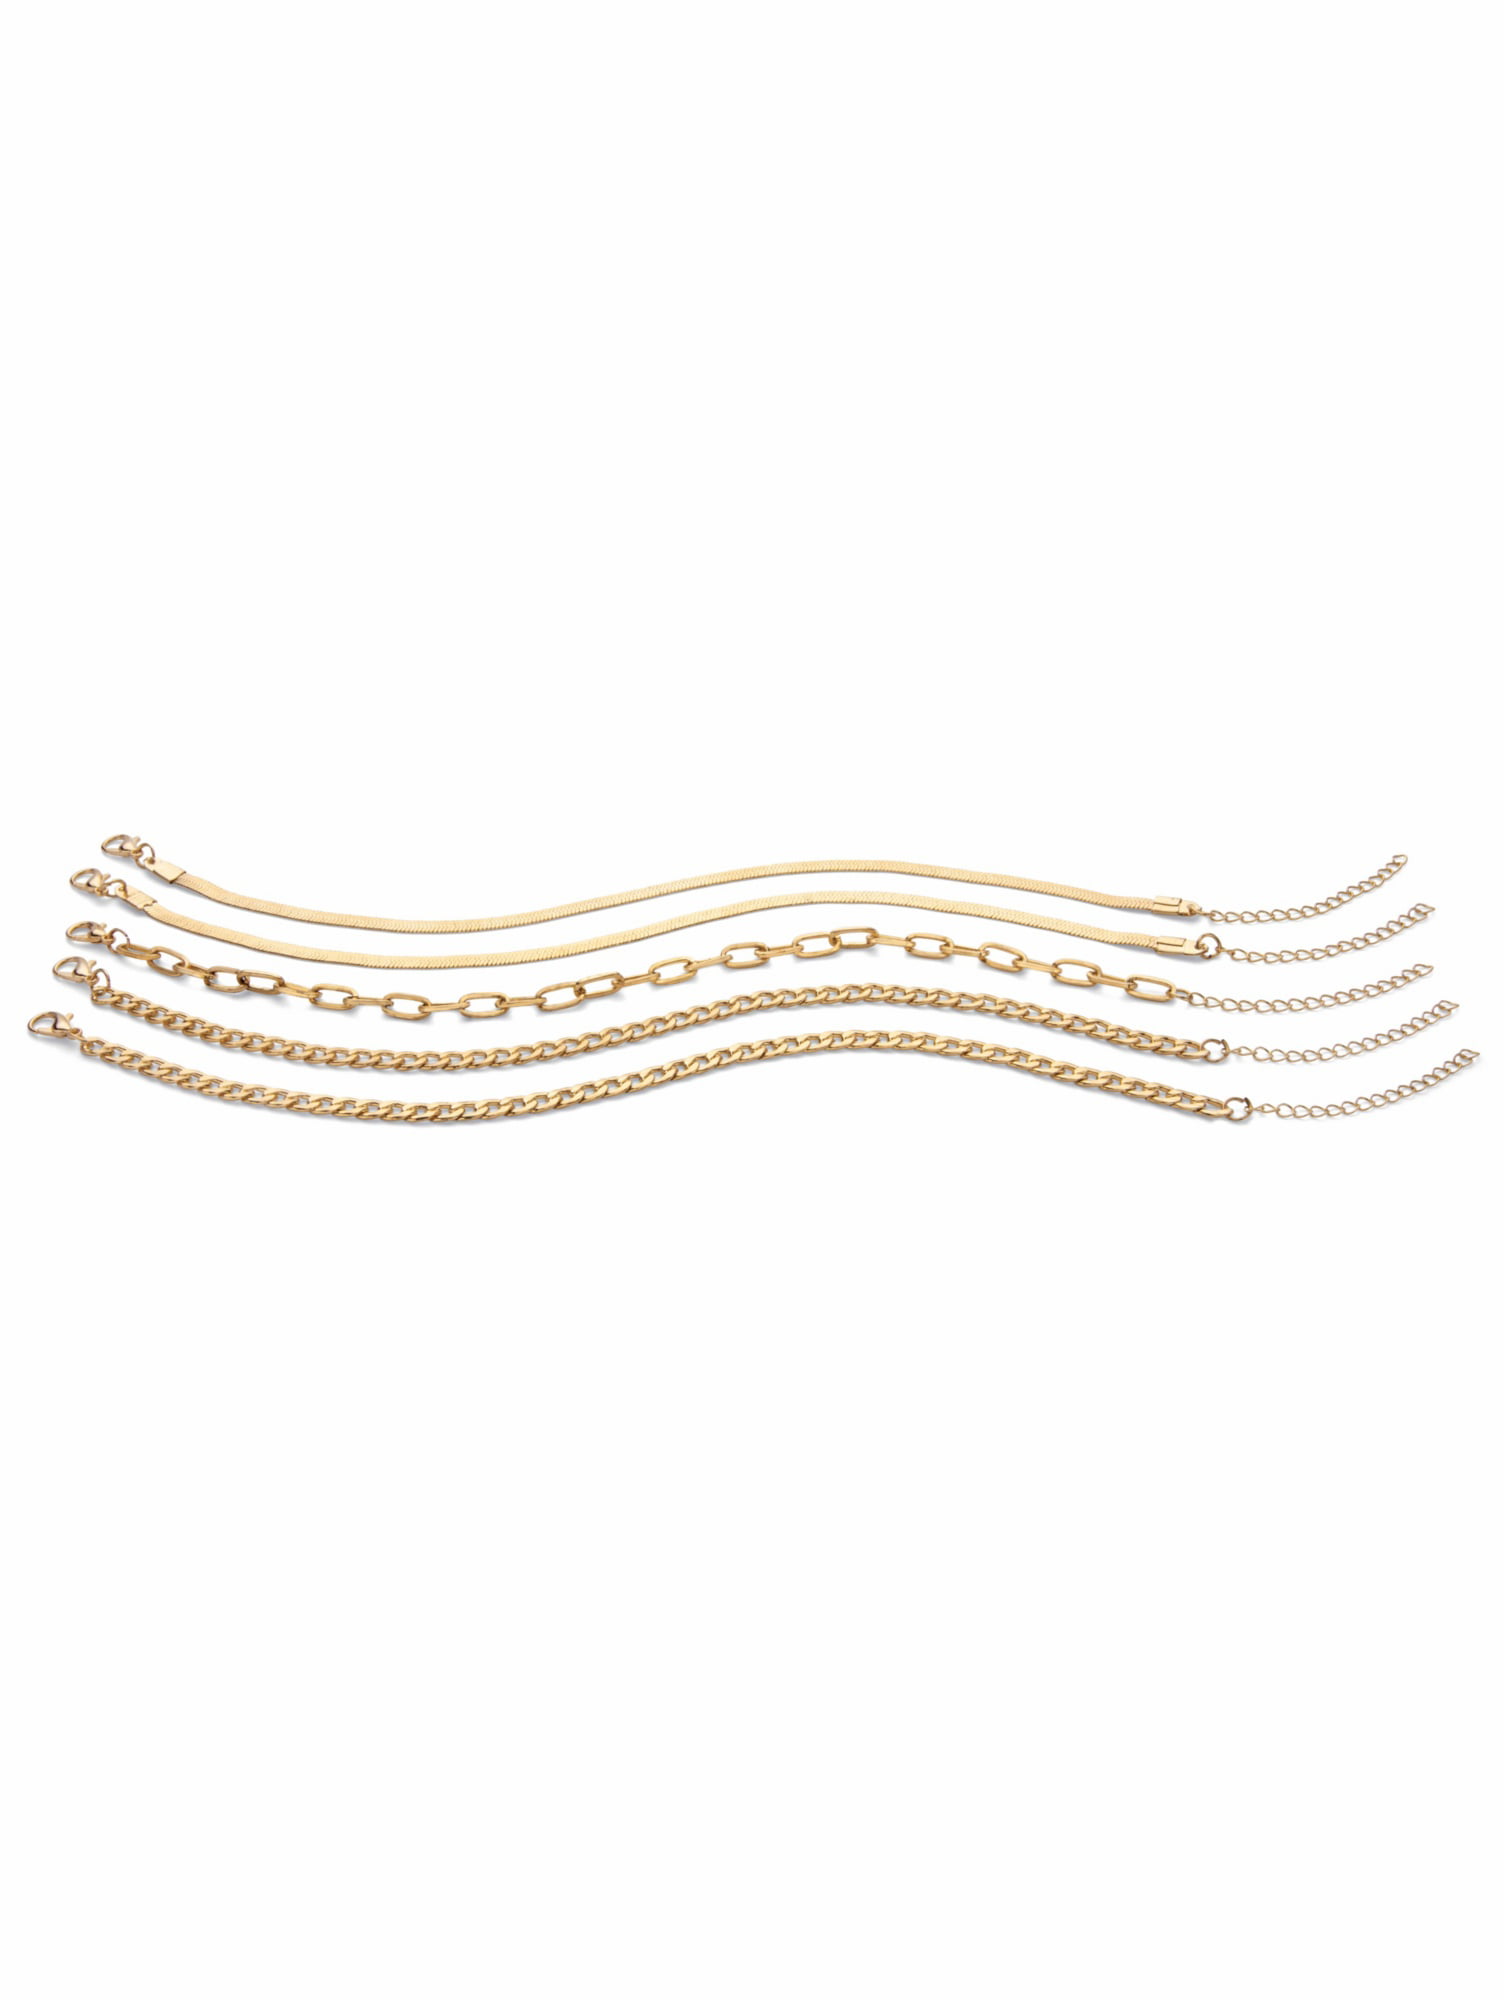 Details about   Beautiful Gold Tone Herring Bone Necklace Chain & Bracelet Set 